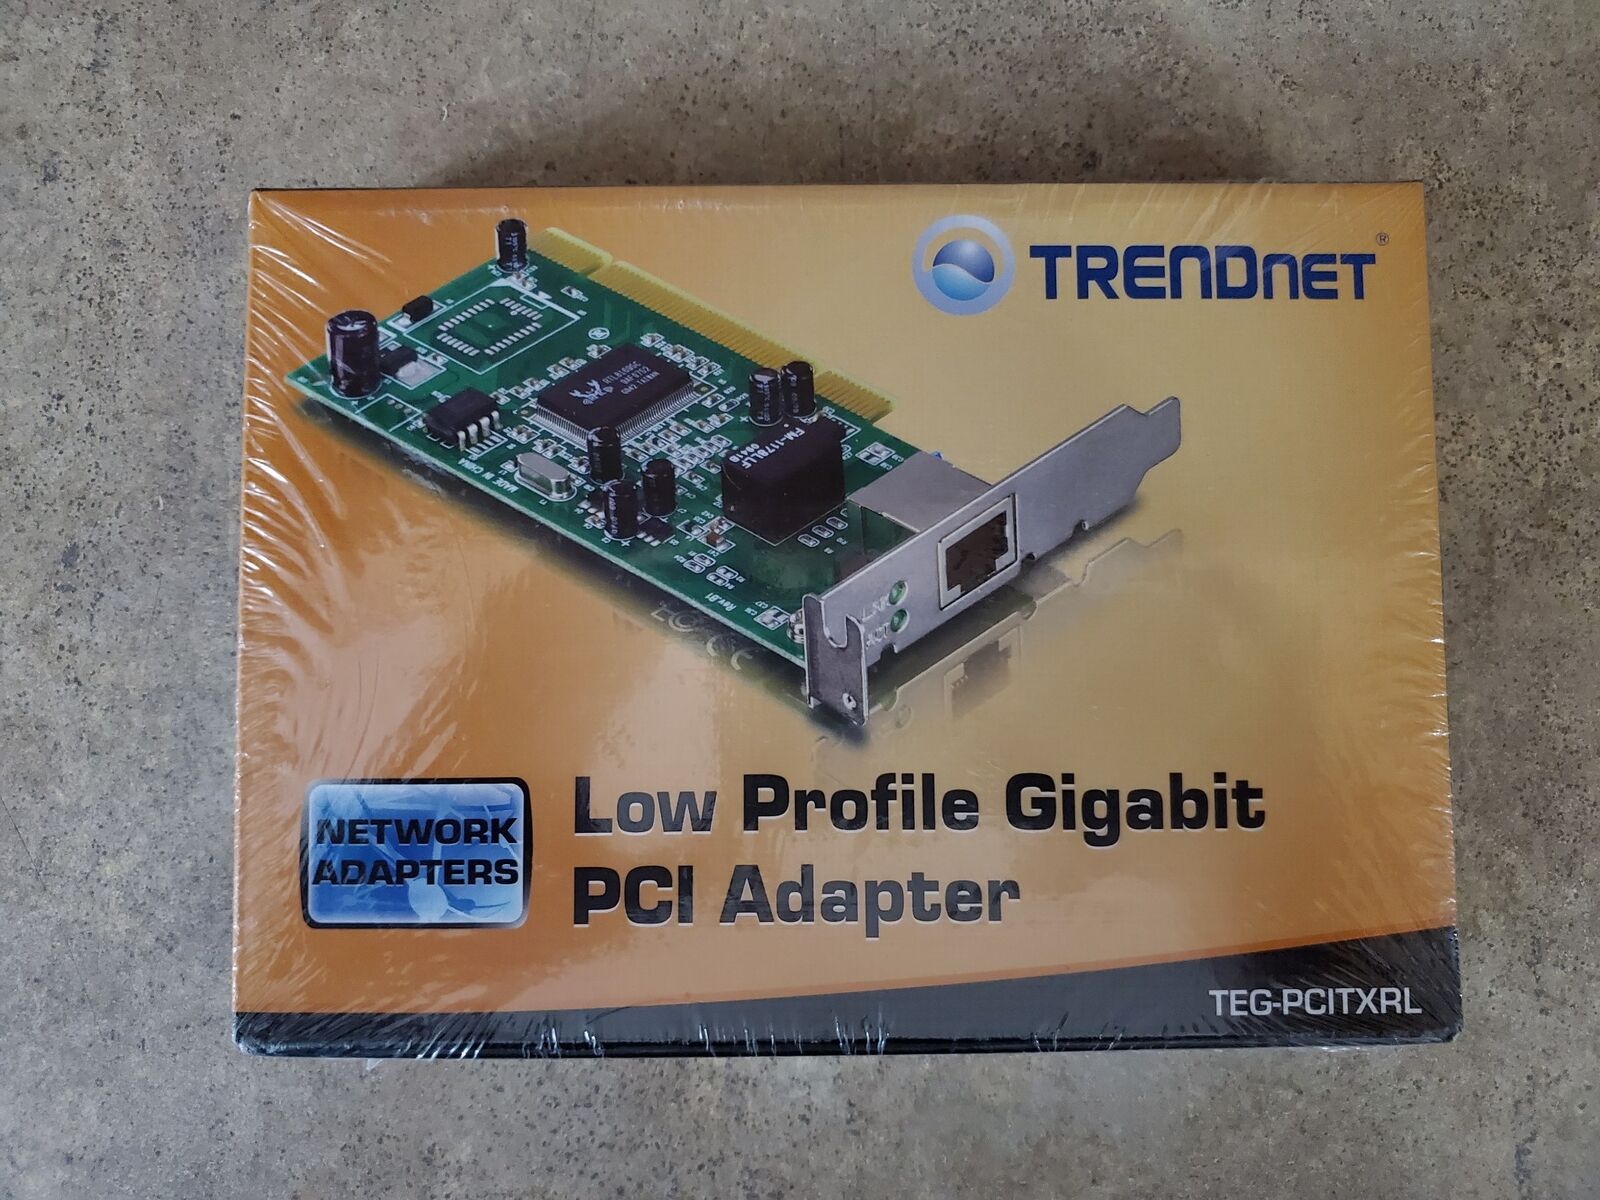 TRENDNET GIGABIT PCI NETWORK ADAPTER TEGPCITXR PCI NETWORK CARD H/W:3.1R / JT-35